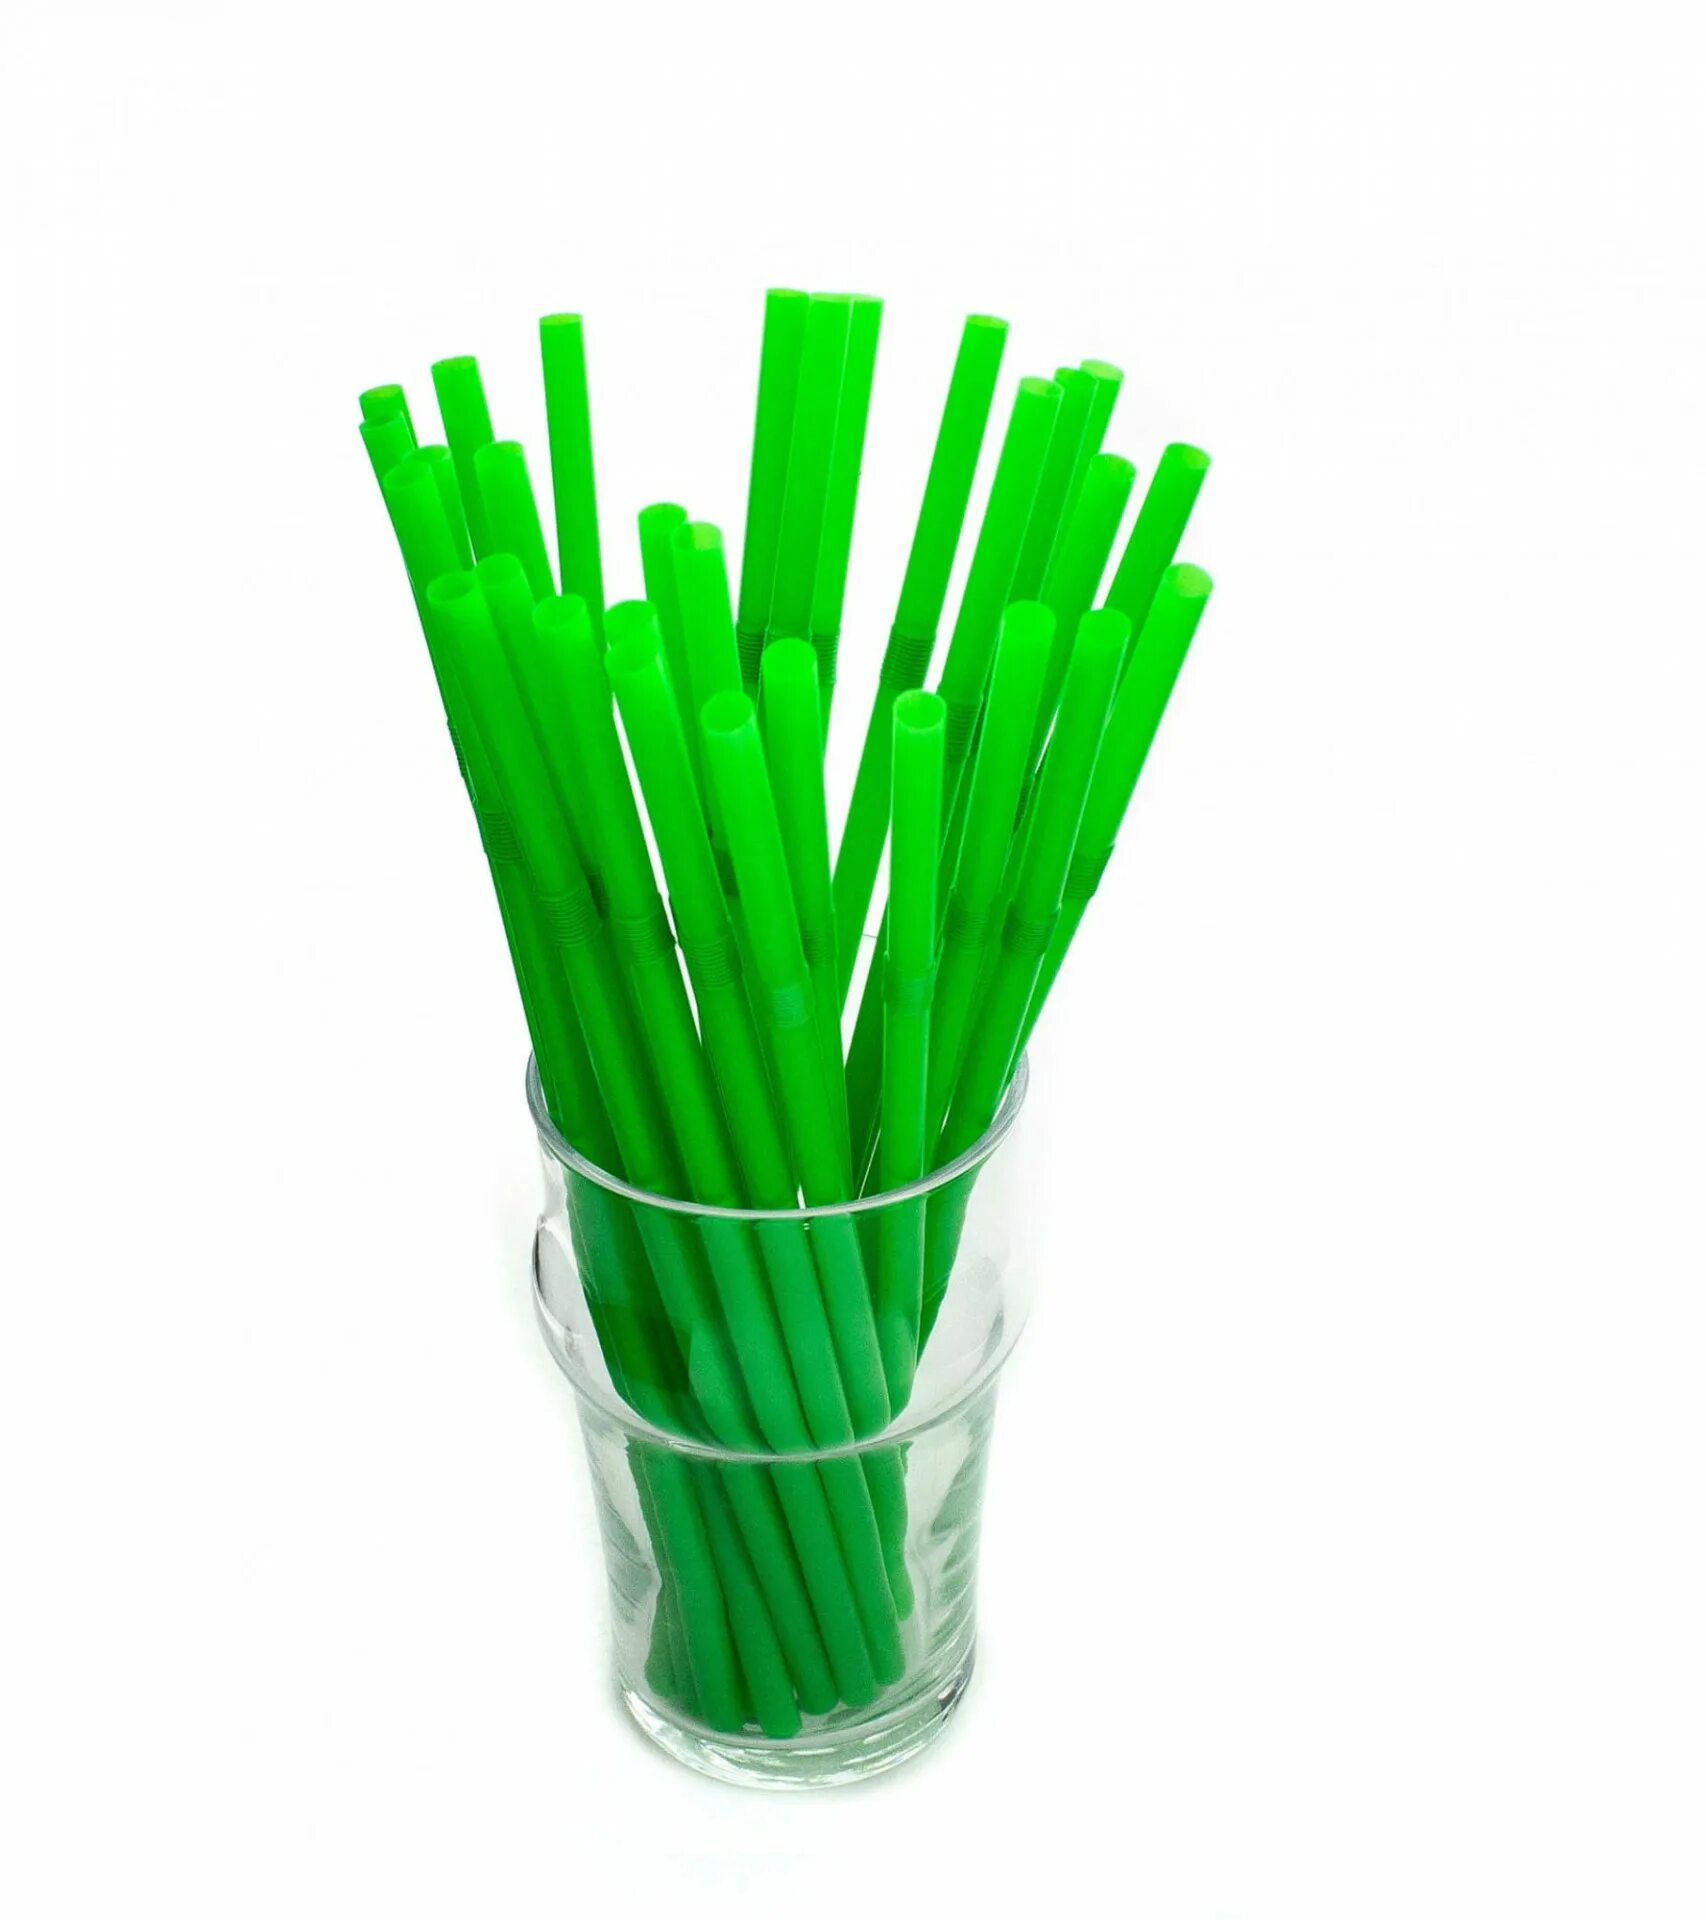 Зеленая трубочка. Трубочки для коктейлей 100 мм. Зеленая соломка трубочка. Зеленые трубочки для коктейлей 10 мм.